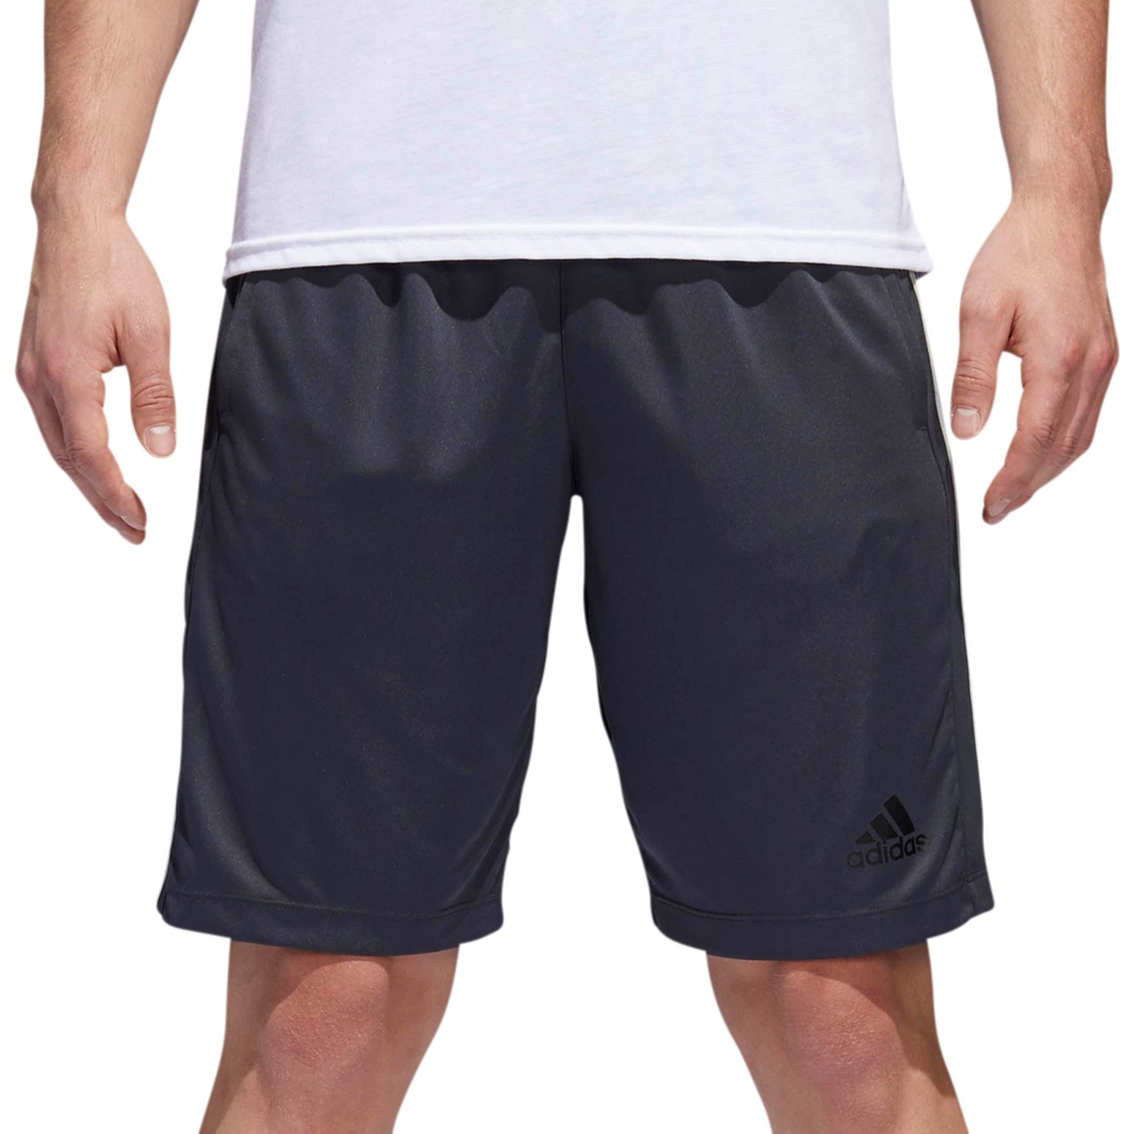 Adidas Design 2 Move 3 Stripe Shorts | Shorts | Father's Day Shop ...